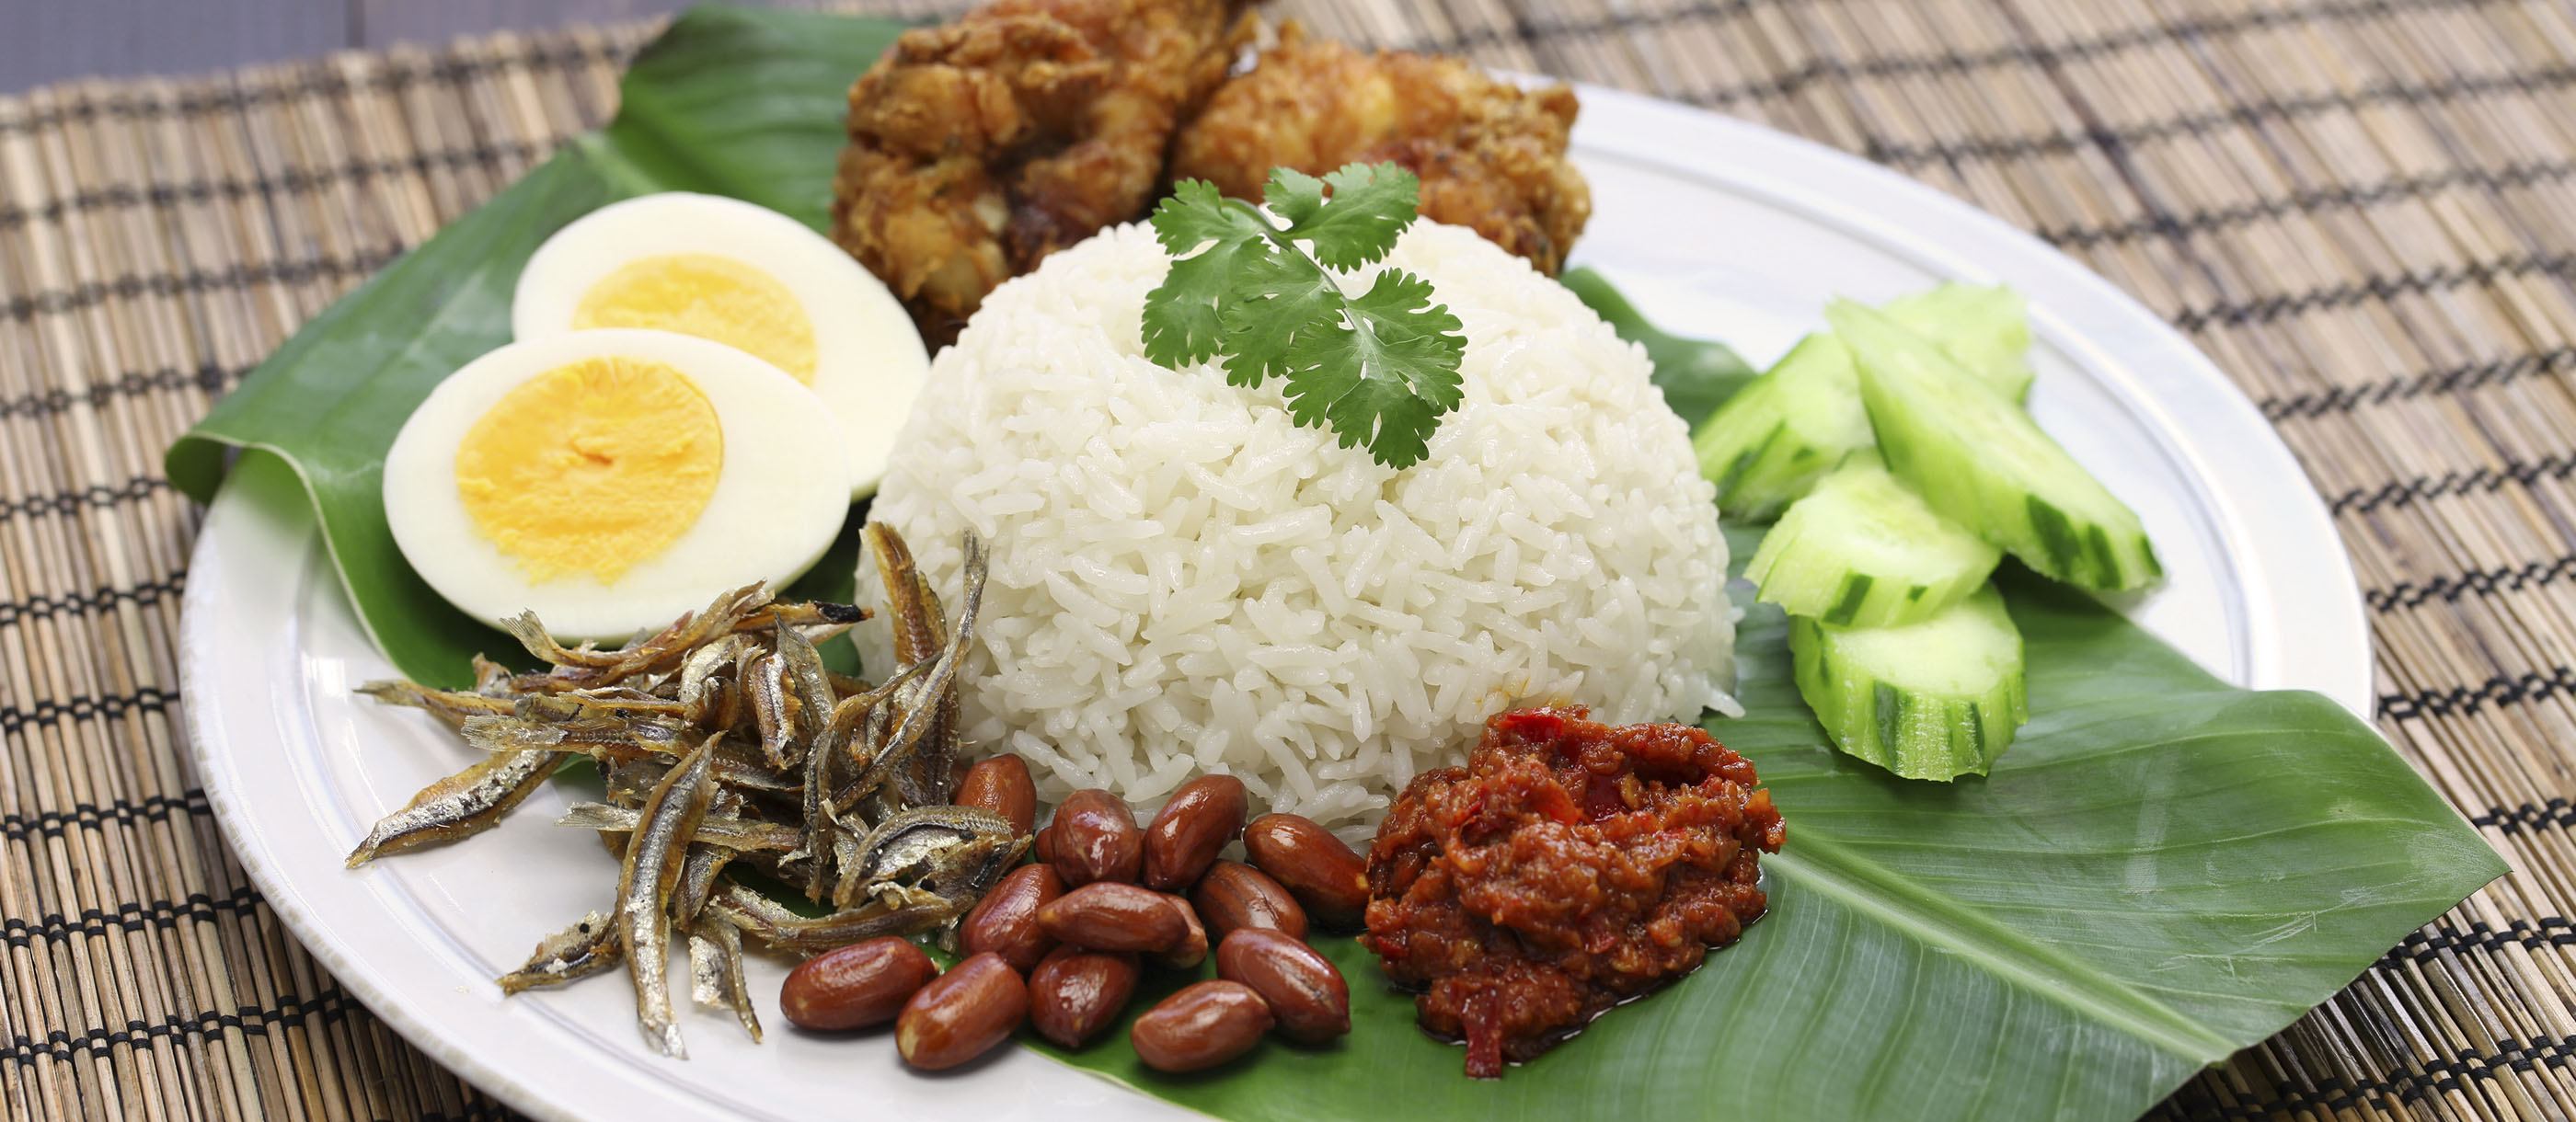 50 Most Popular Malaysian Foods - TasteAtlas